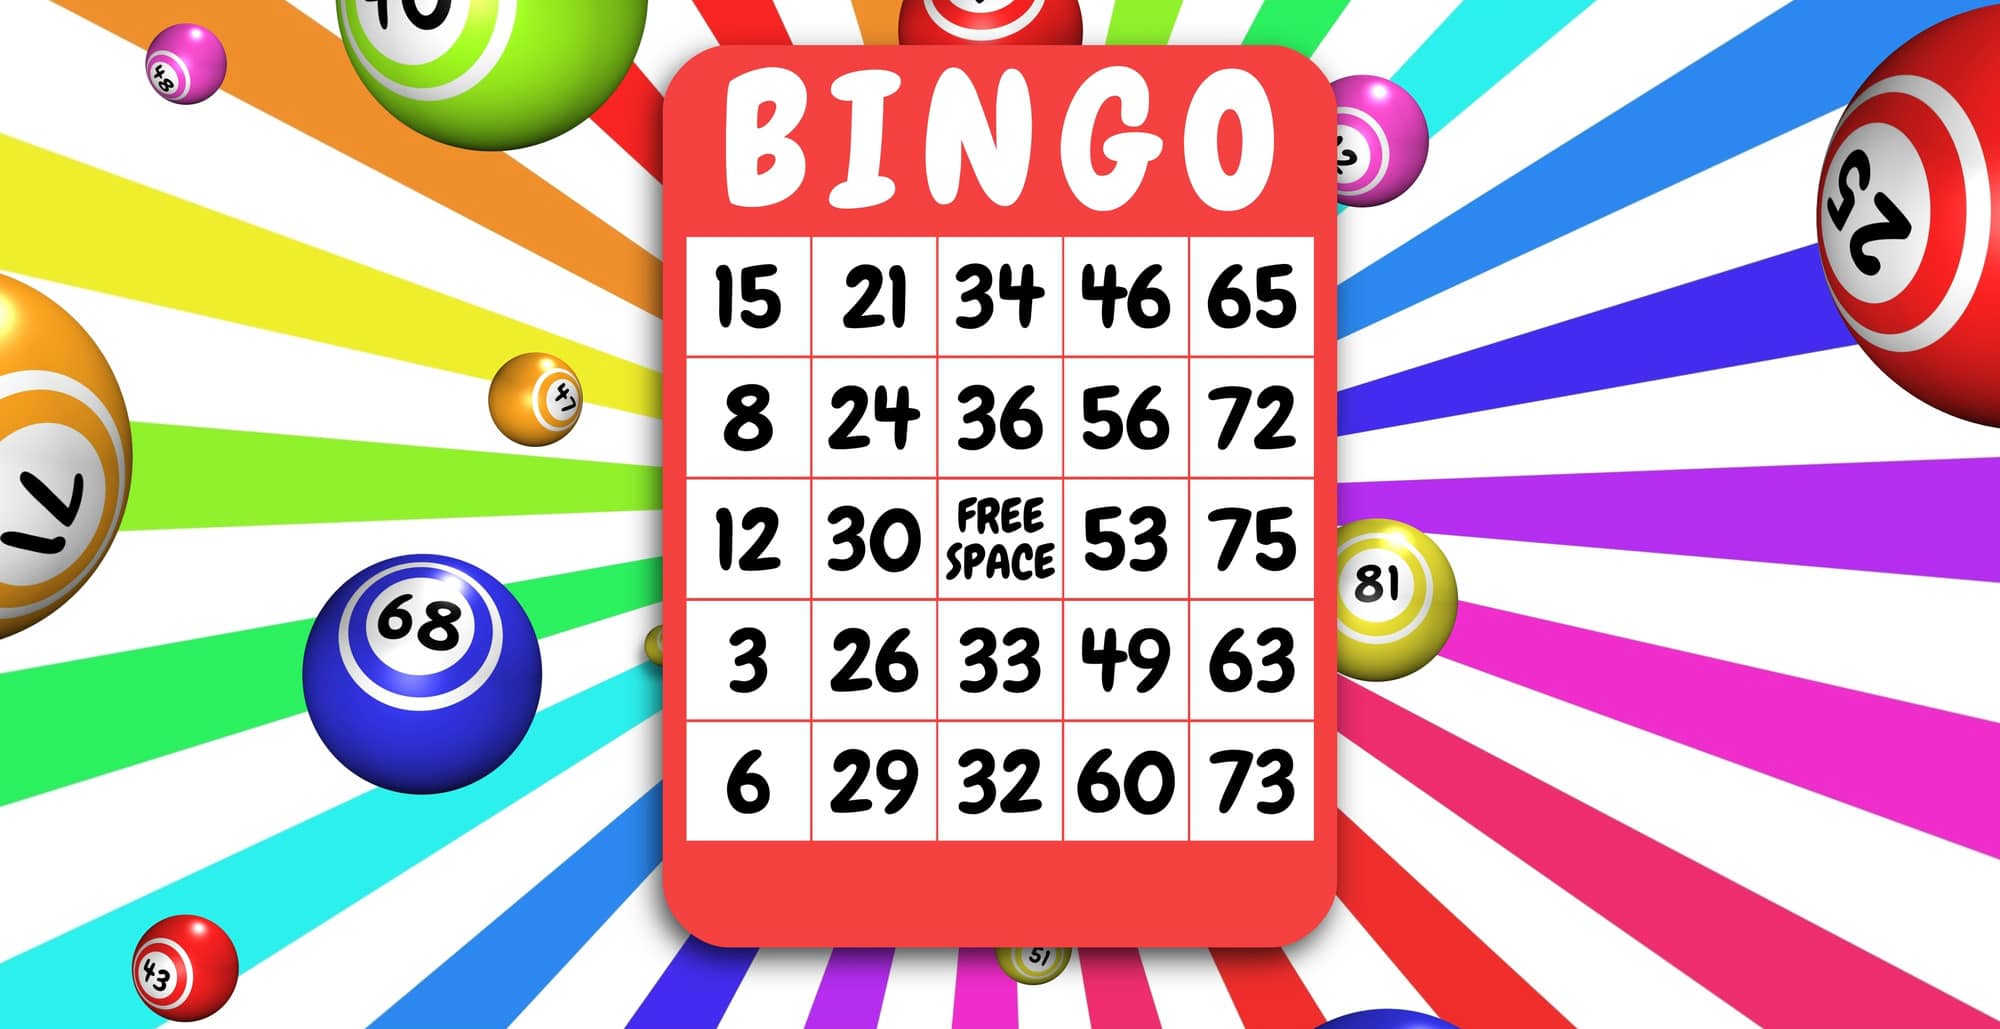 How To Run A Bingo Game